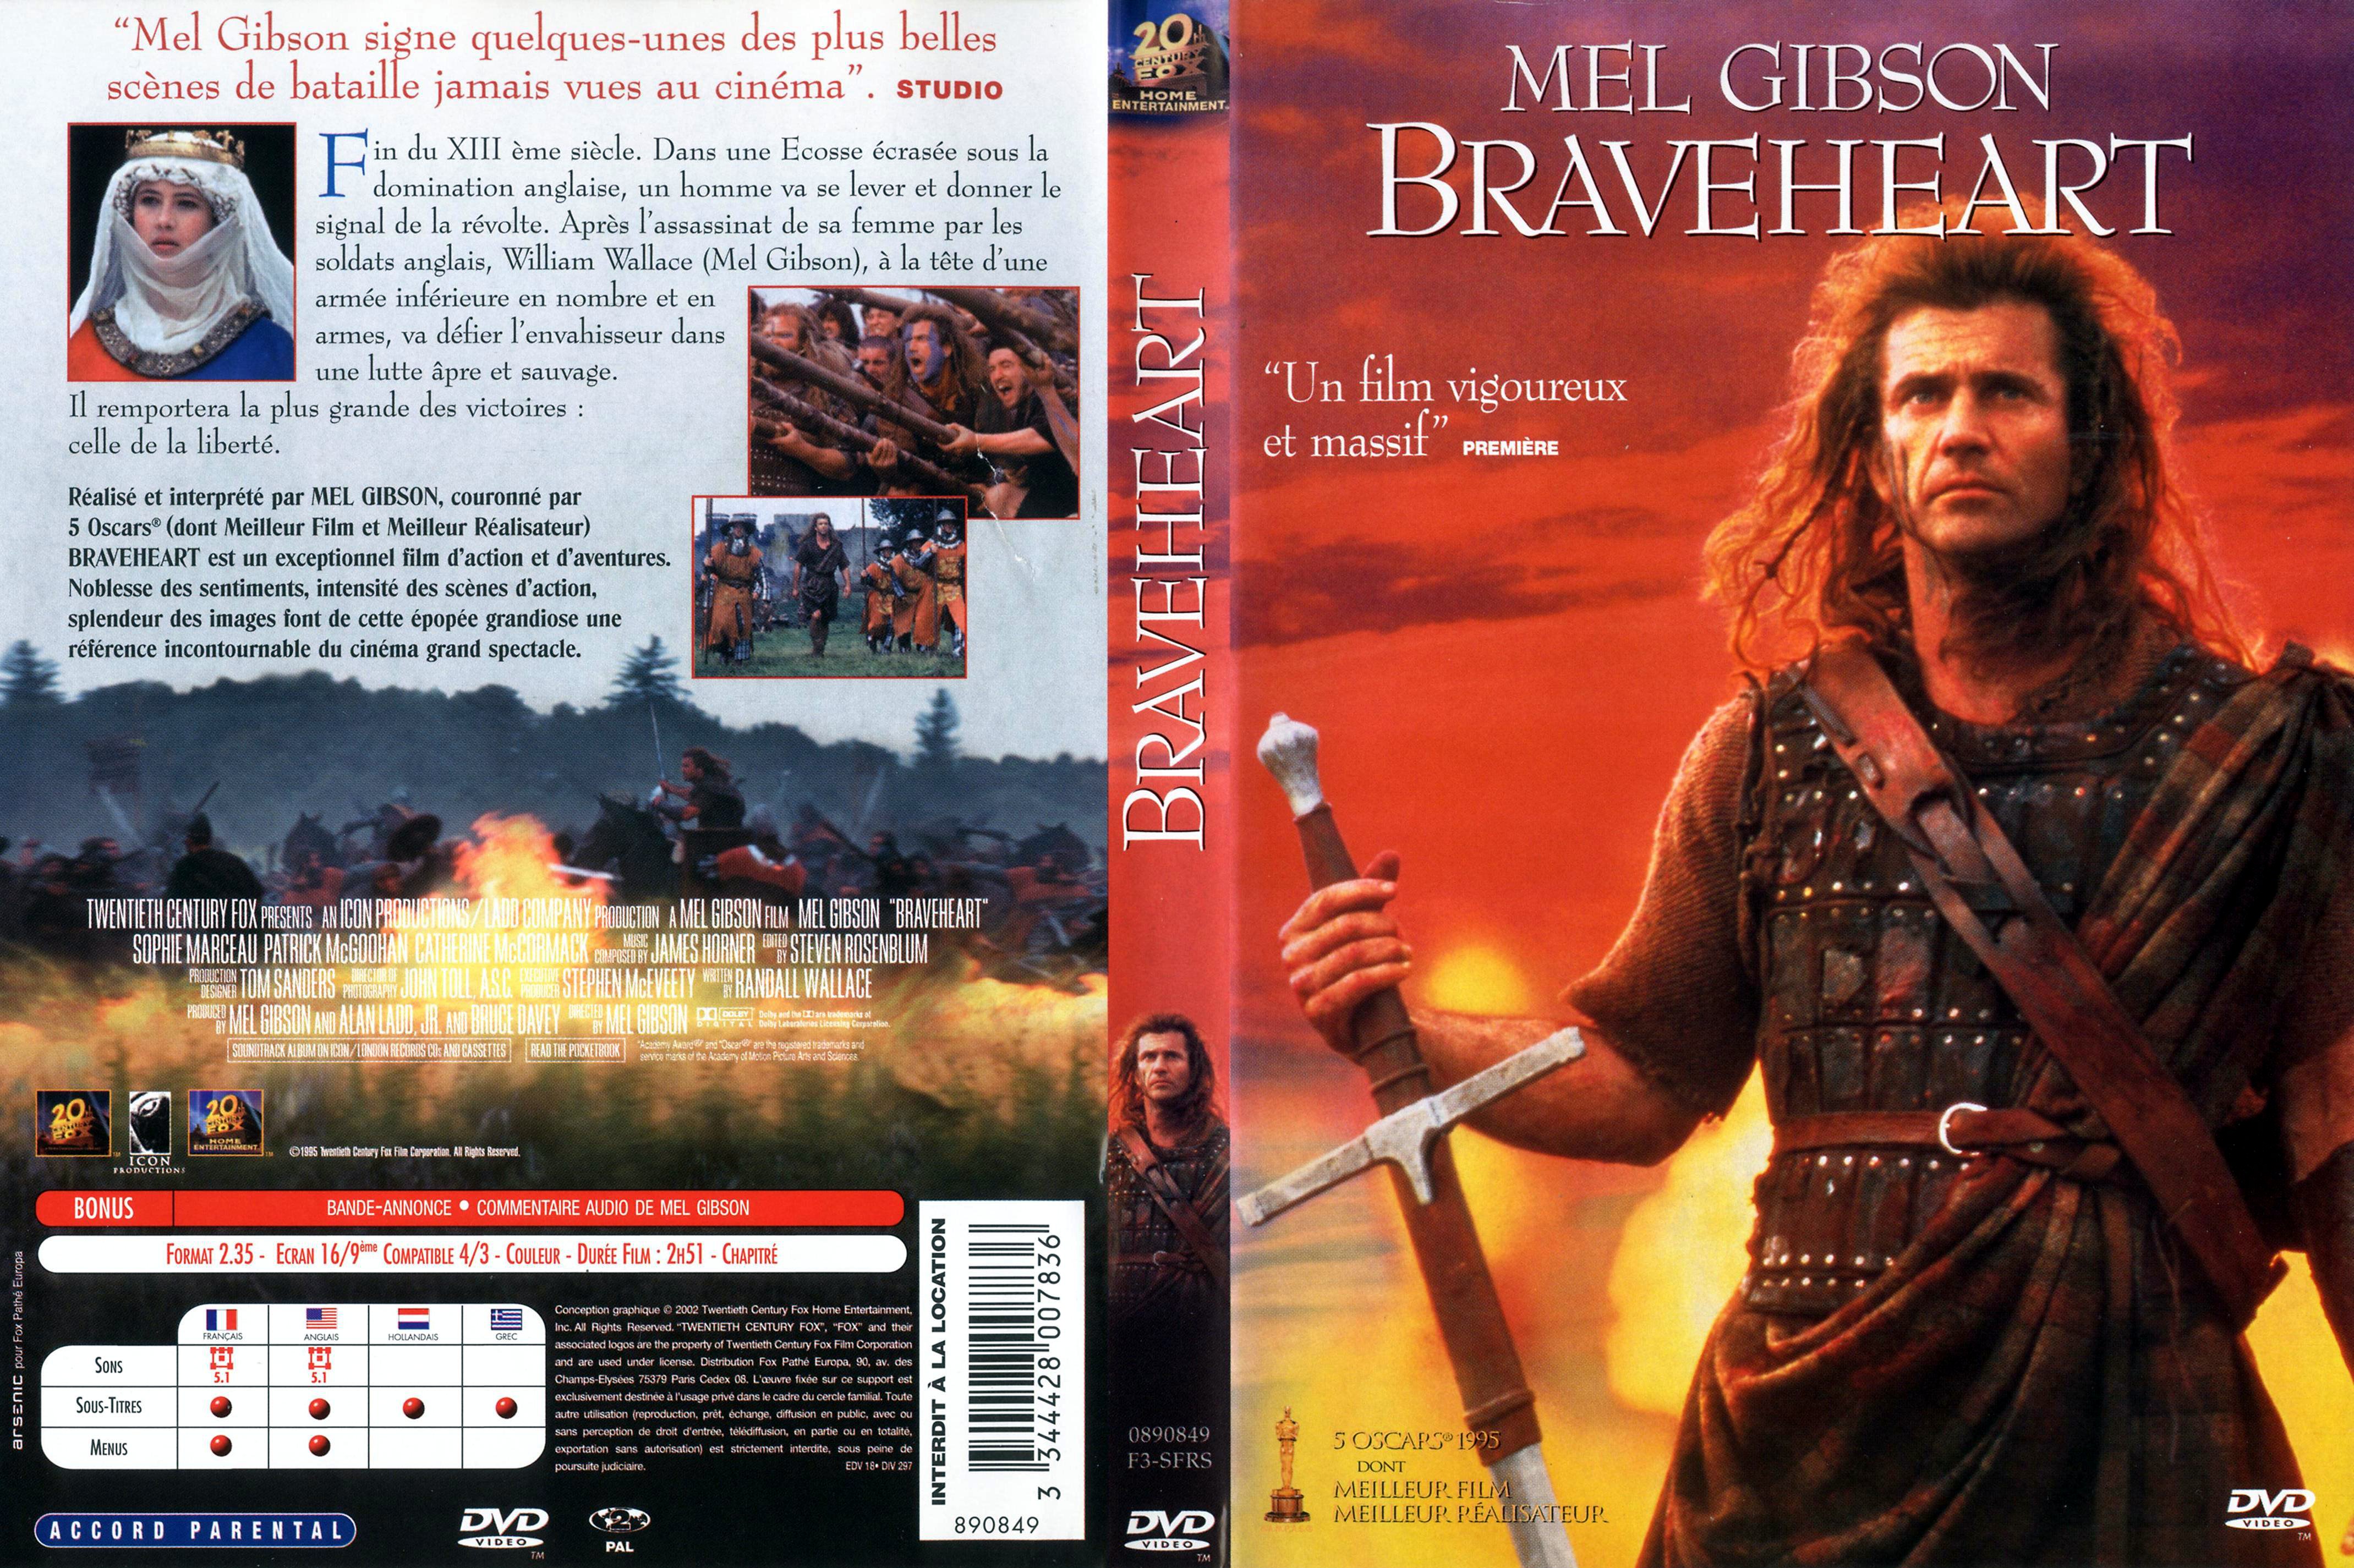 Jaquette DVD Braveheart v4